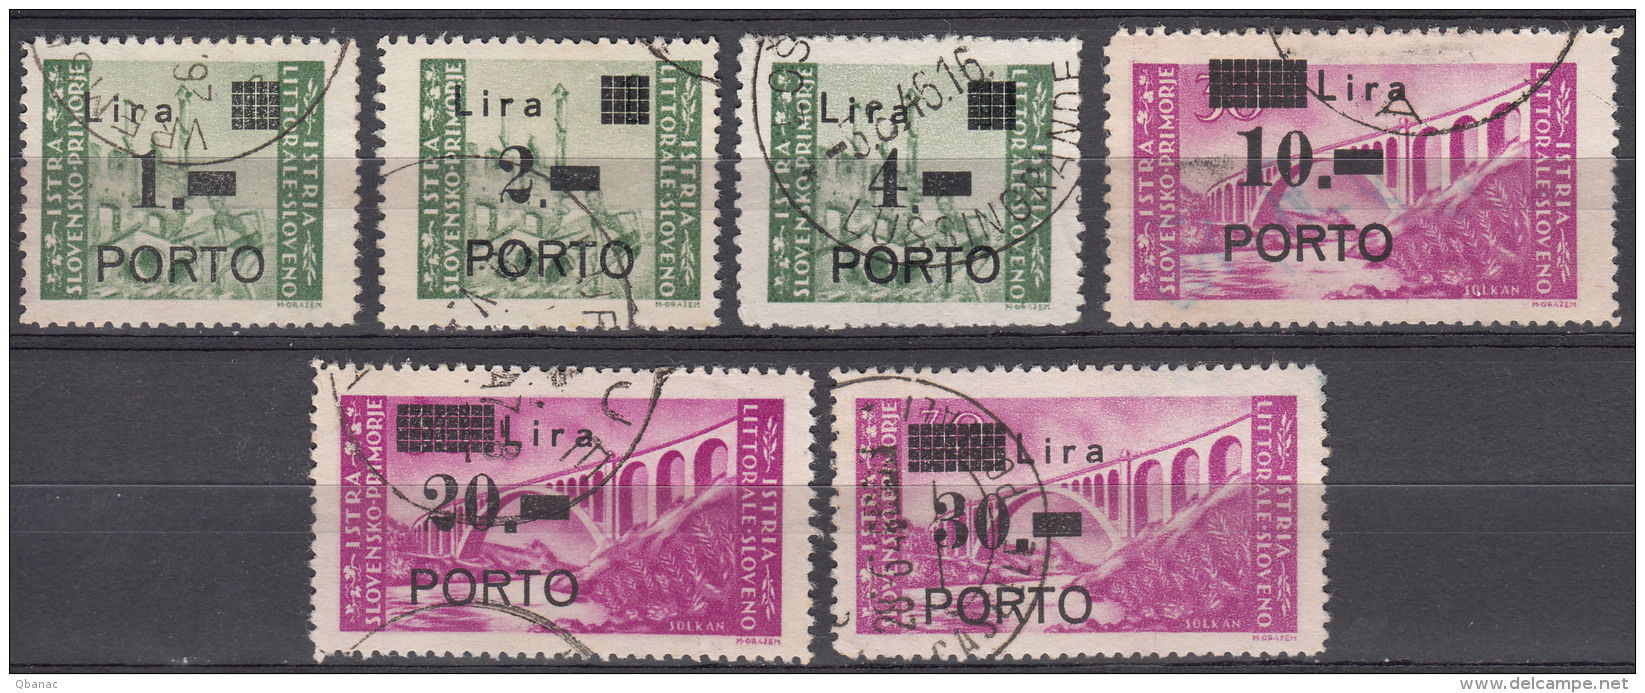 Istria Litorale Yugoslavia Occupation, Porto 1946 Sassone#8-13 Used, First Stamp Big Point After "1" (first Stamp) - Yugoslavian Occ.: Istria